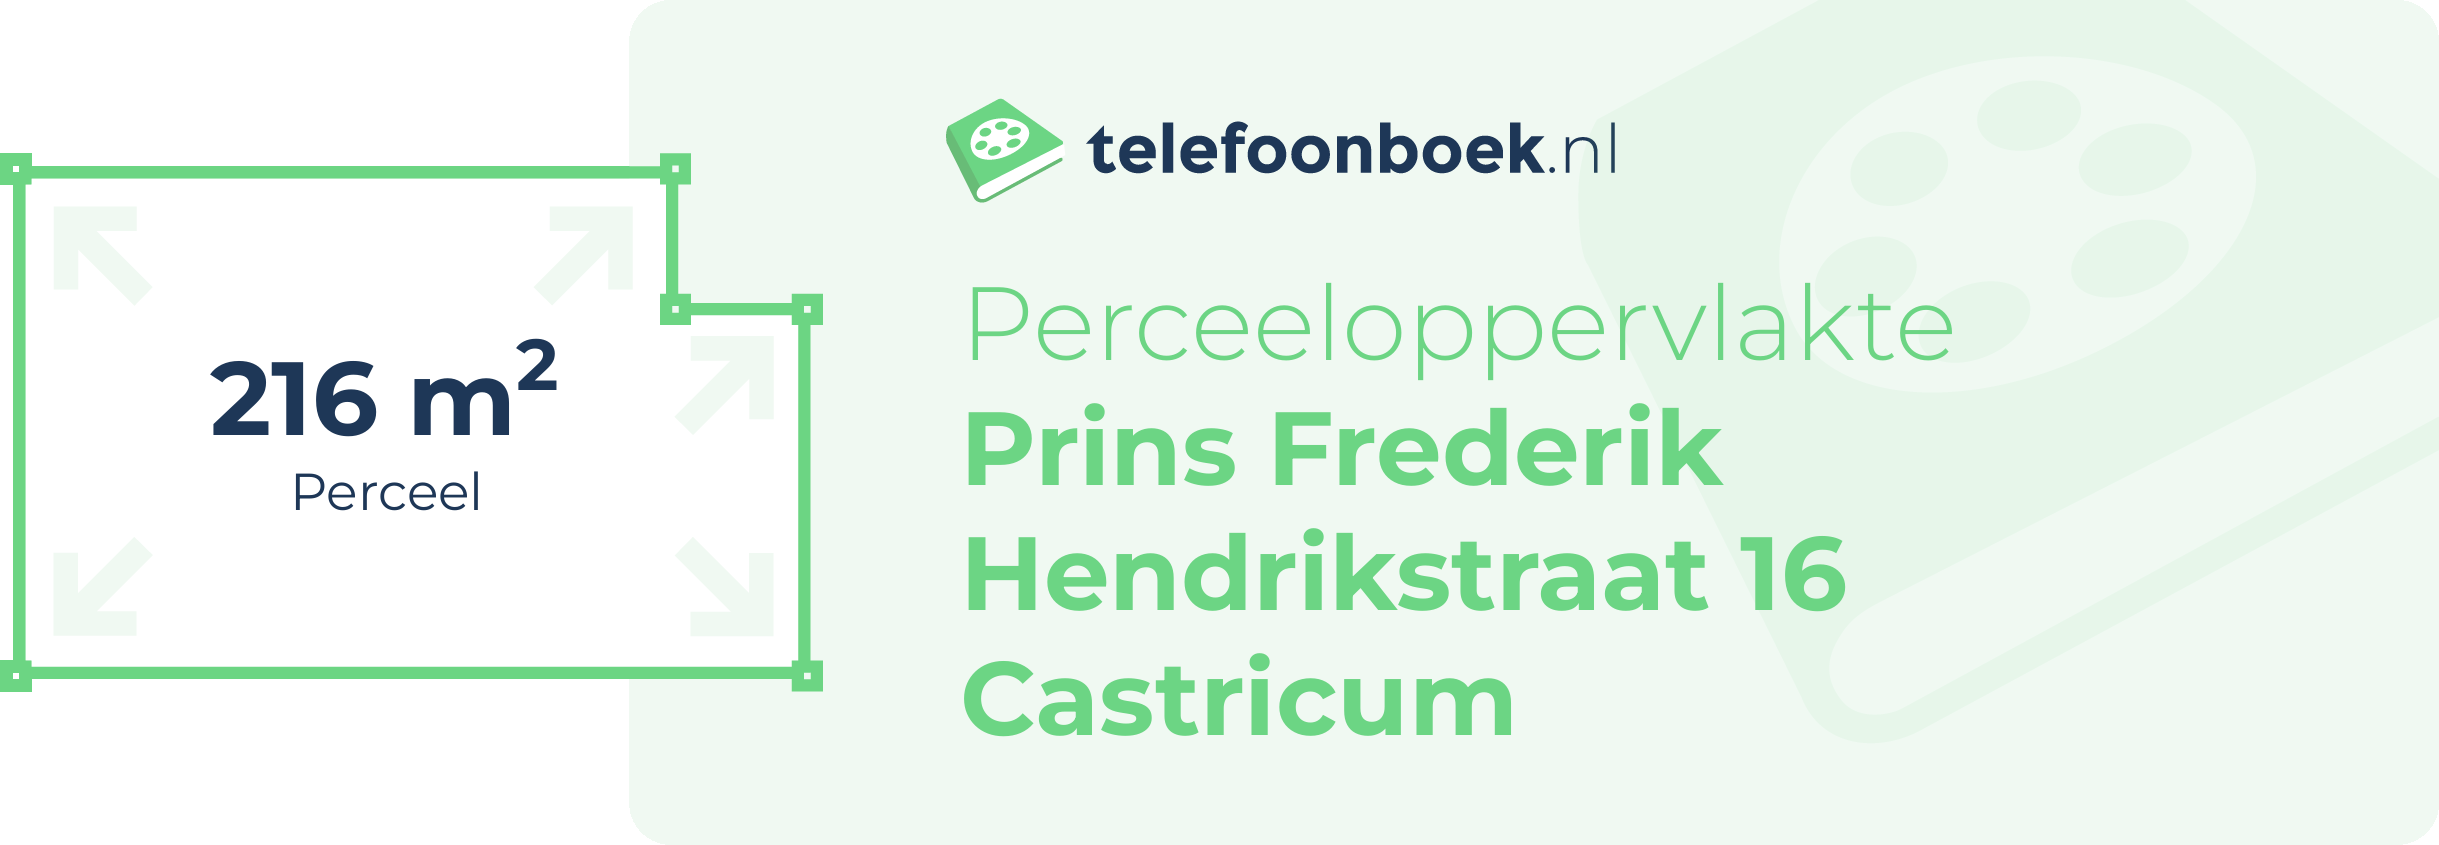 Perceeloppervlakte Prins Frederik Hendrikstraat 16 Castricum